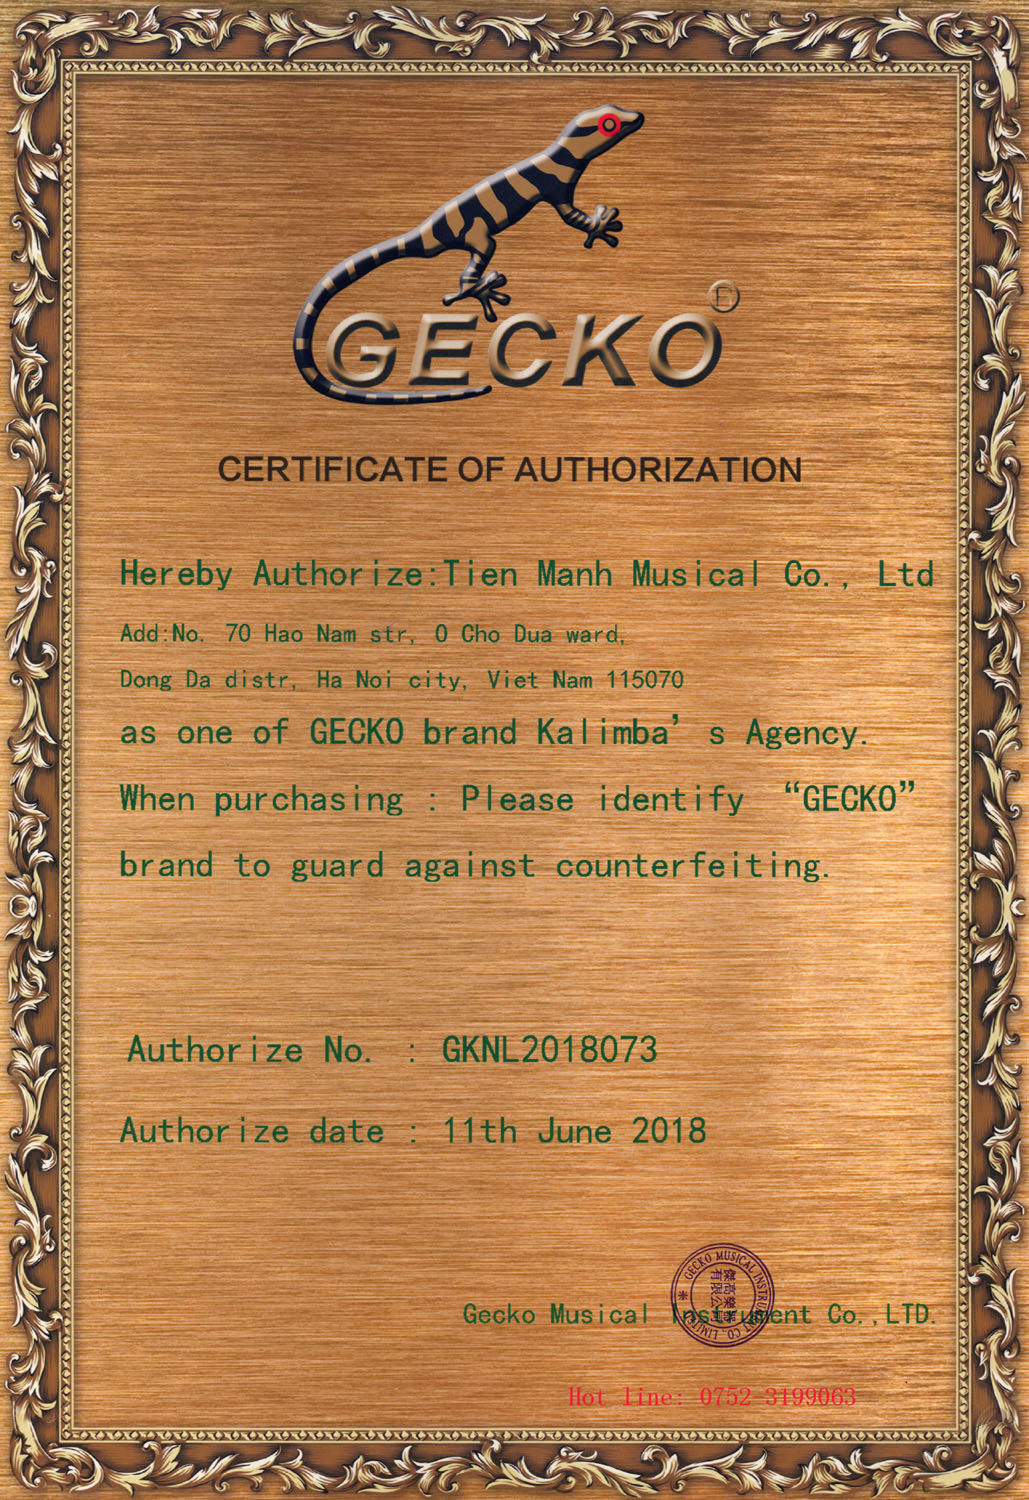 42-Certificate-Gecko-Authorization-Tien-Manh-Music.jpg